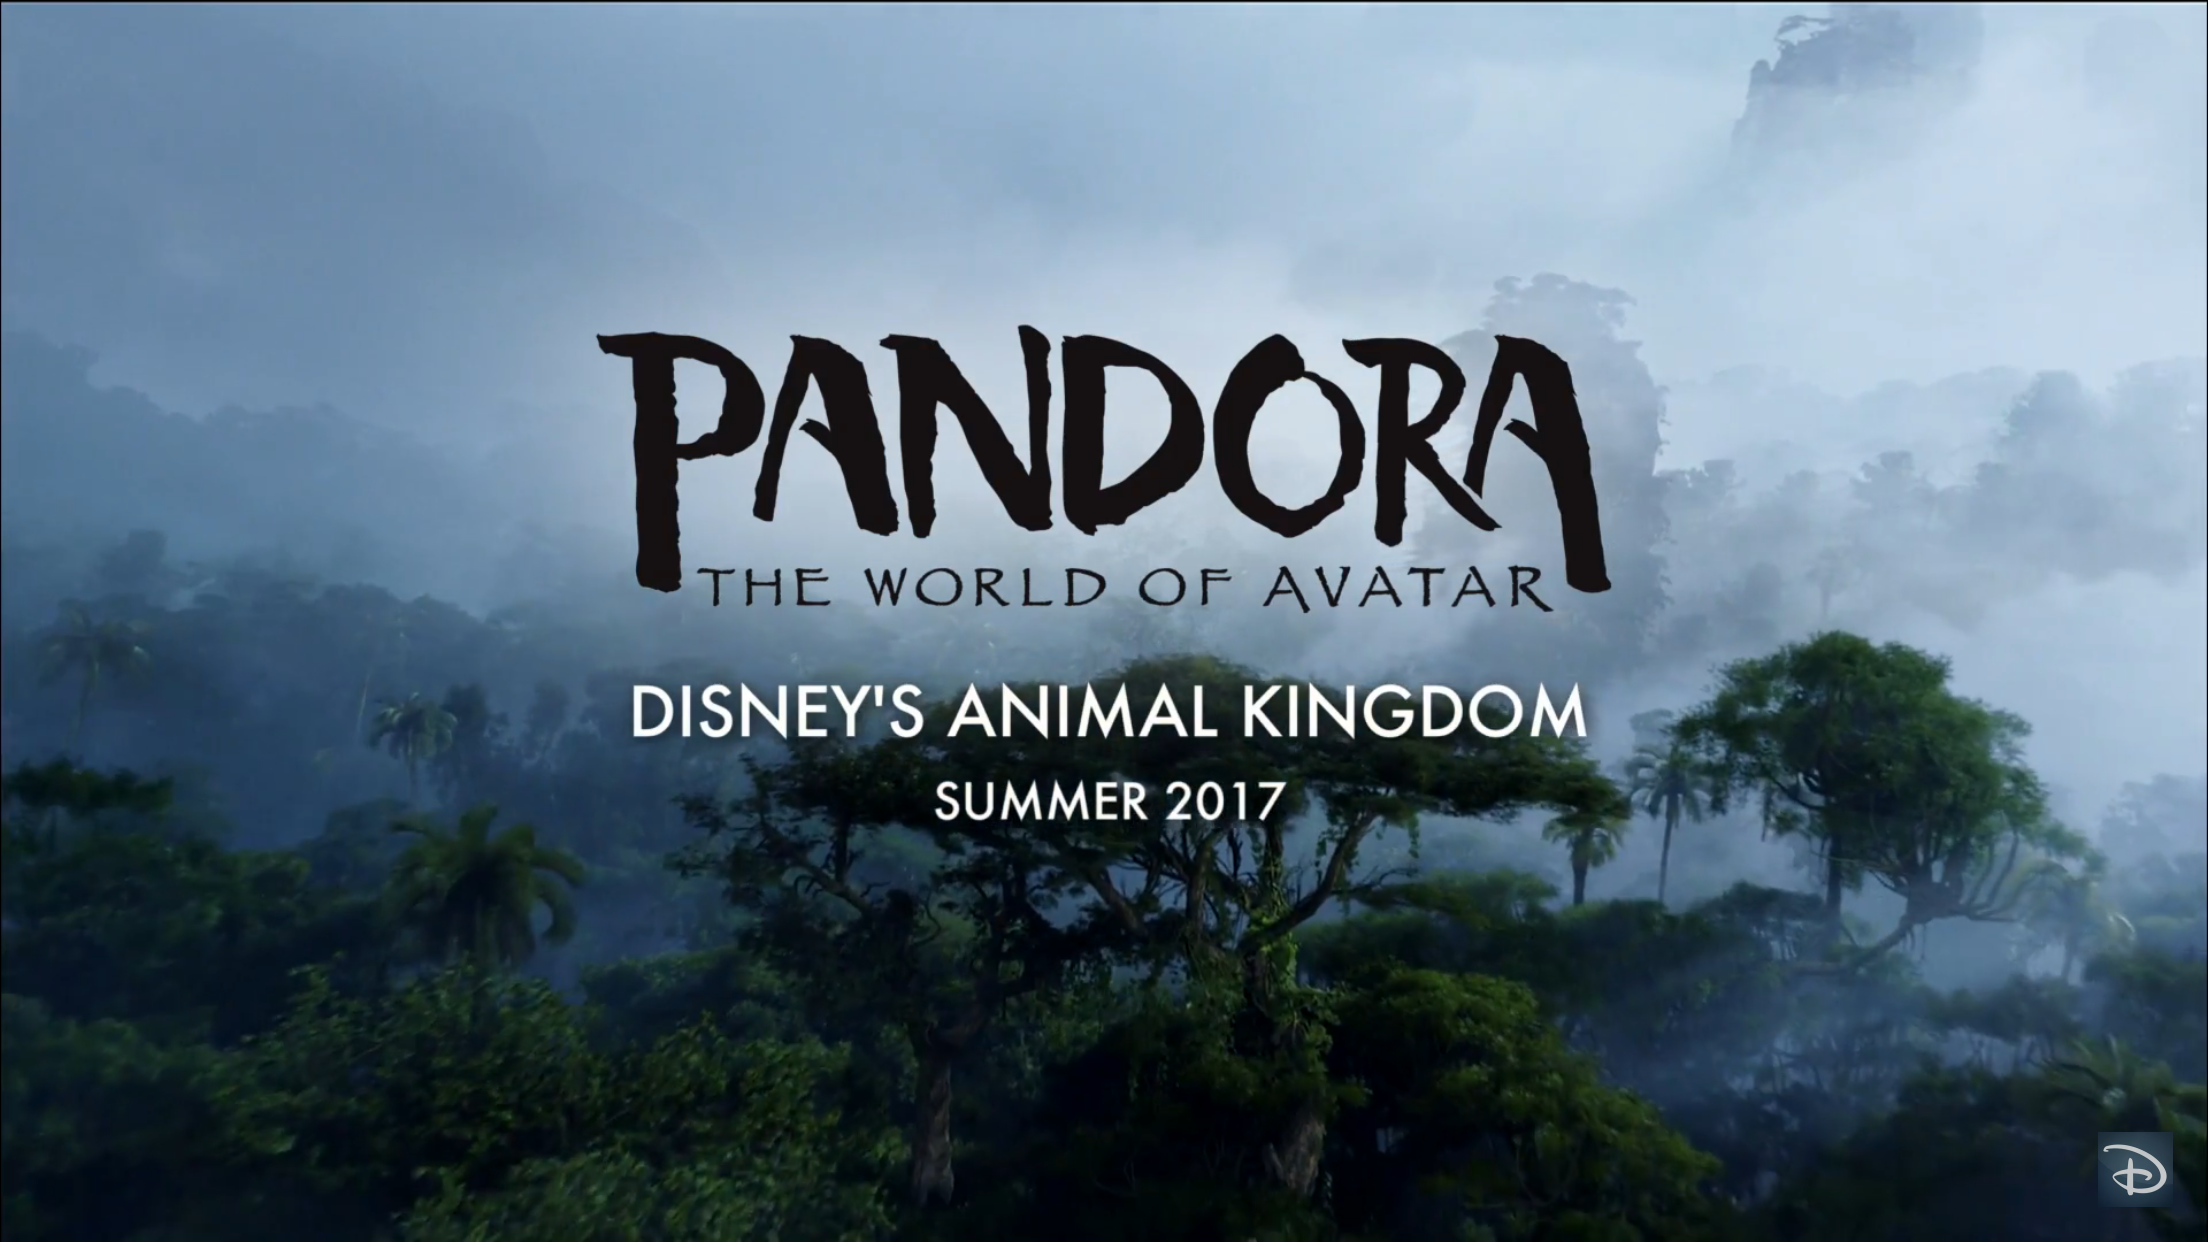 Аватар ворлд все открыто 1.81. Pandora: the World of avatar в Disney’s animal Kingdom. Дисней парк аватар. Pandora – the World of avatar.